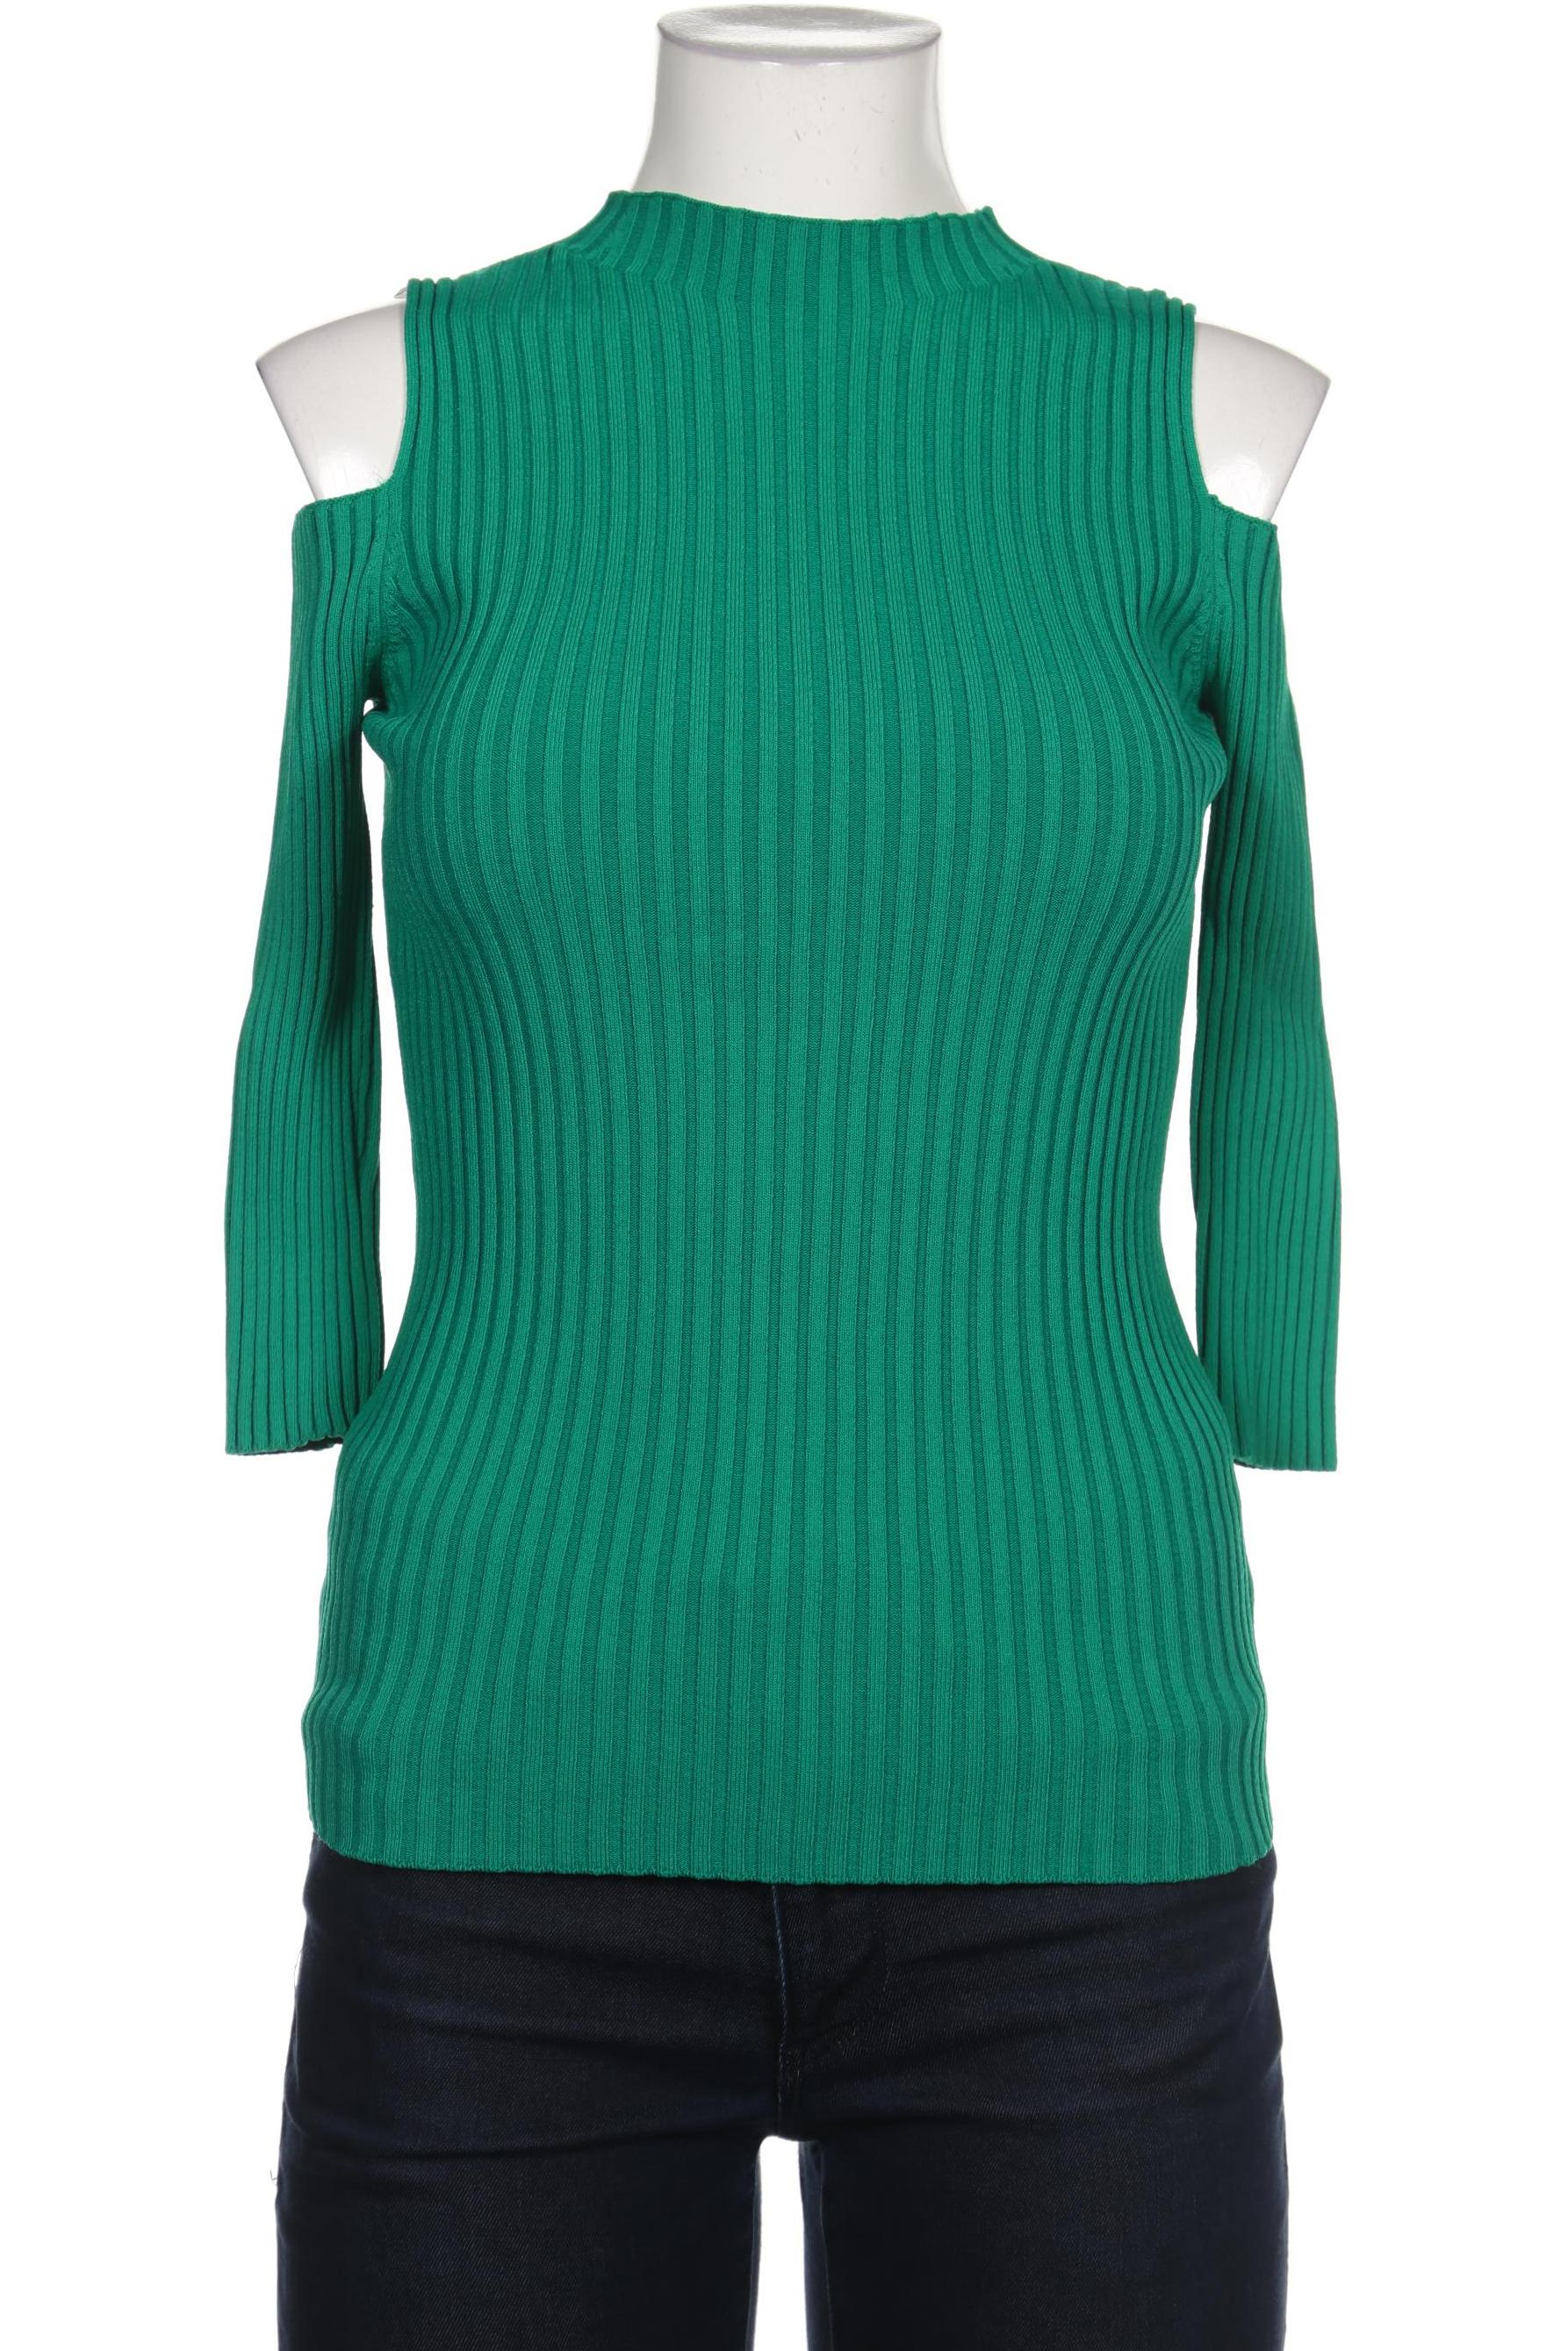 maje Damen Pullover, grün von Maje